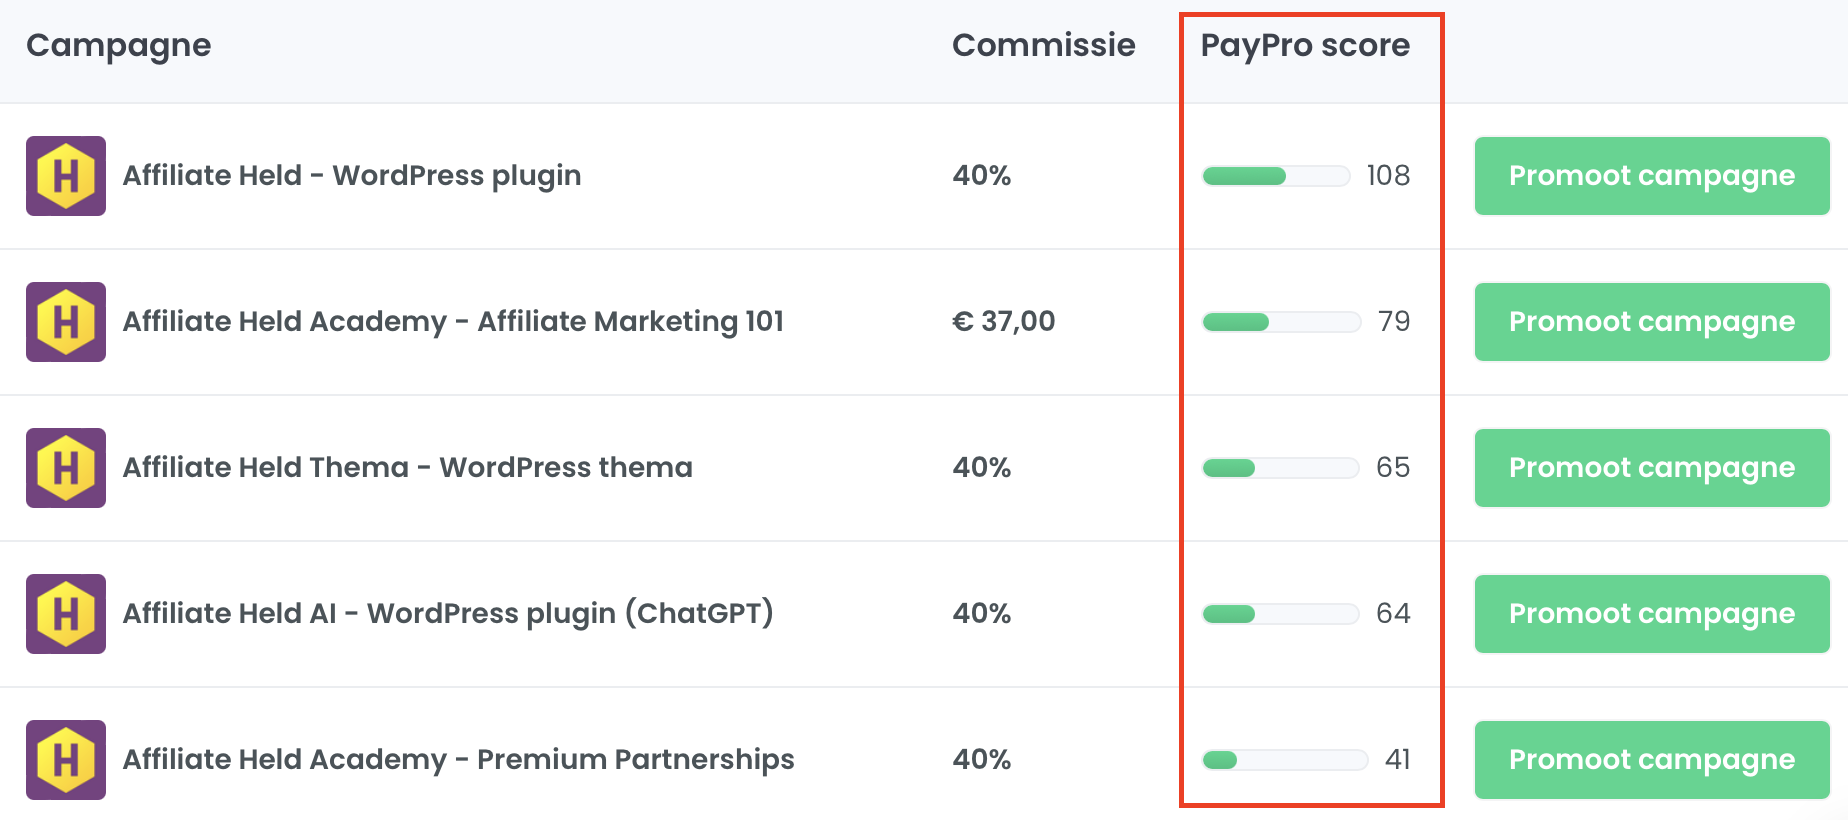 PayPro score